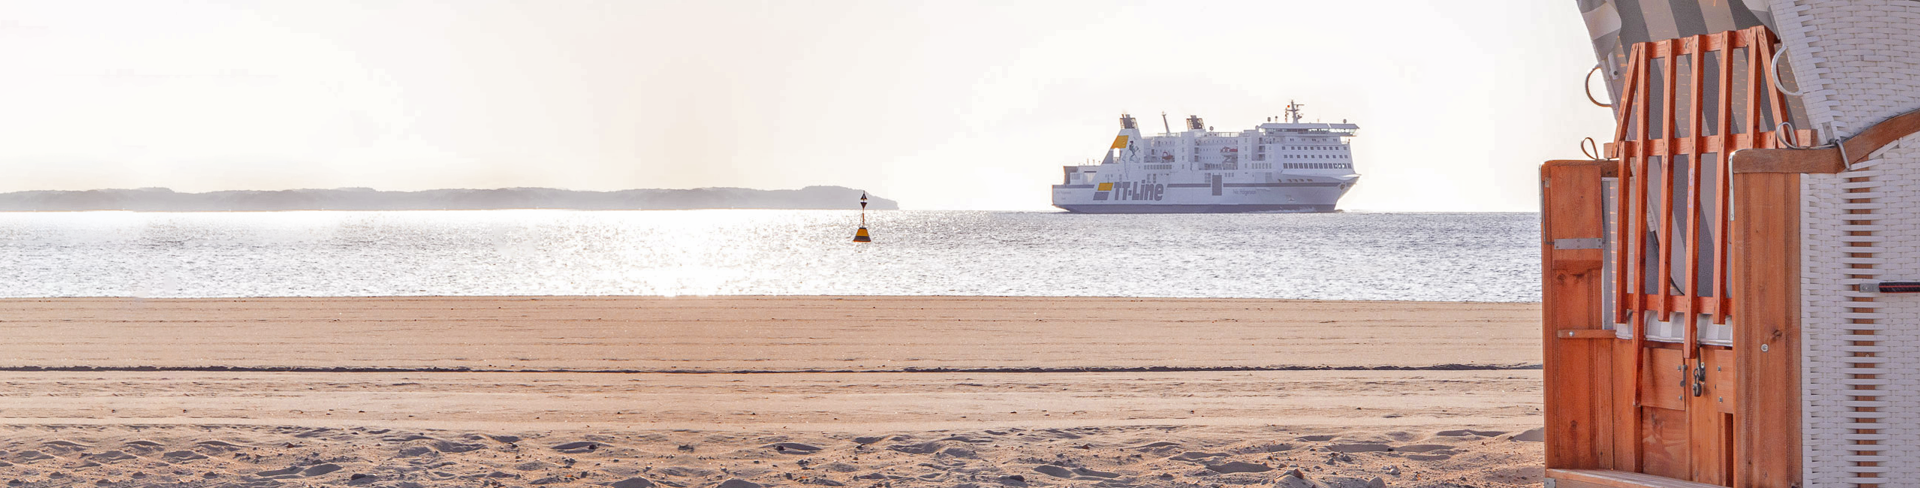 Port-Travemünde-TT-Line-ferry-Nils-Holgersson-beach basket